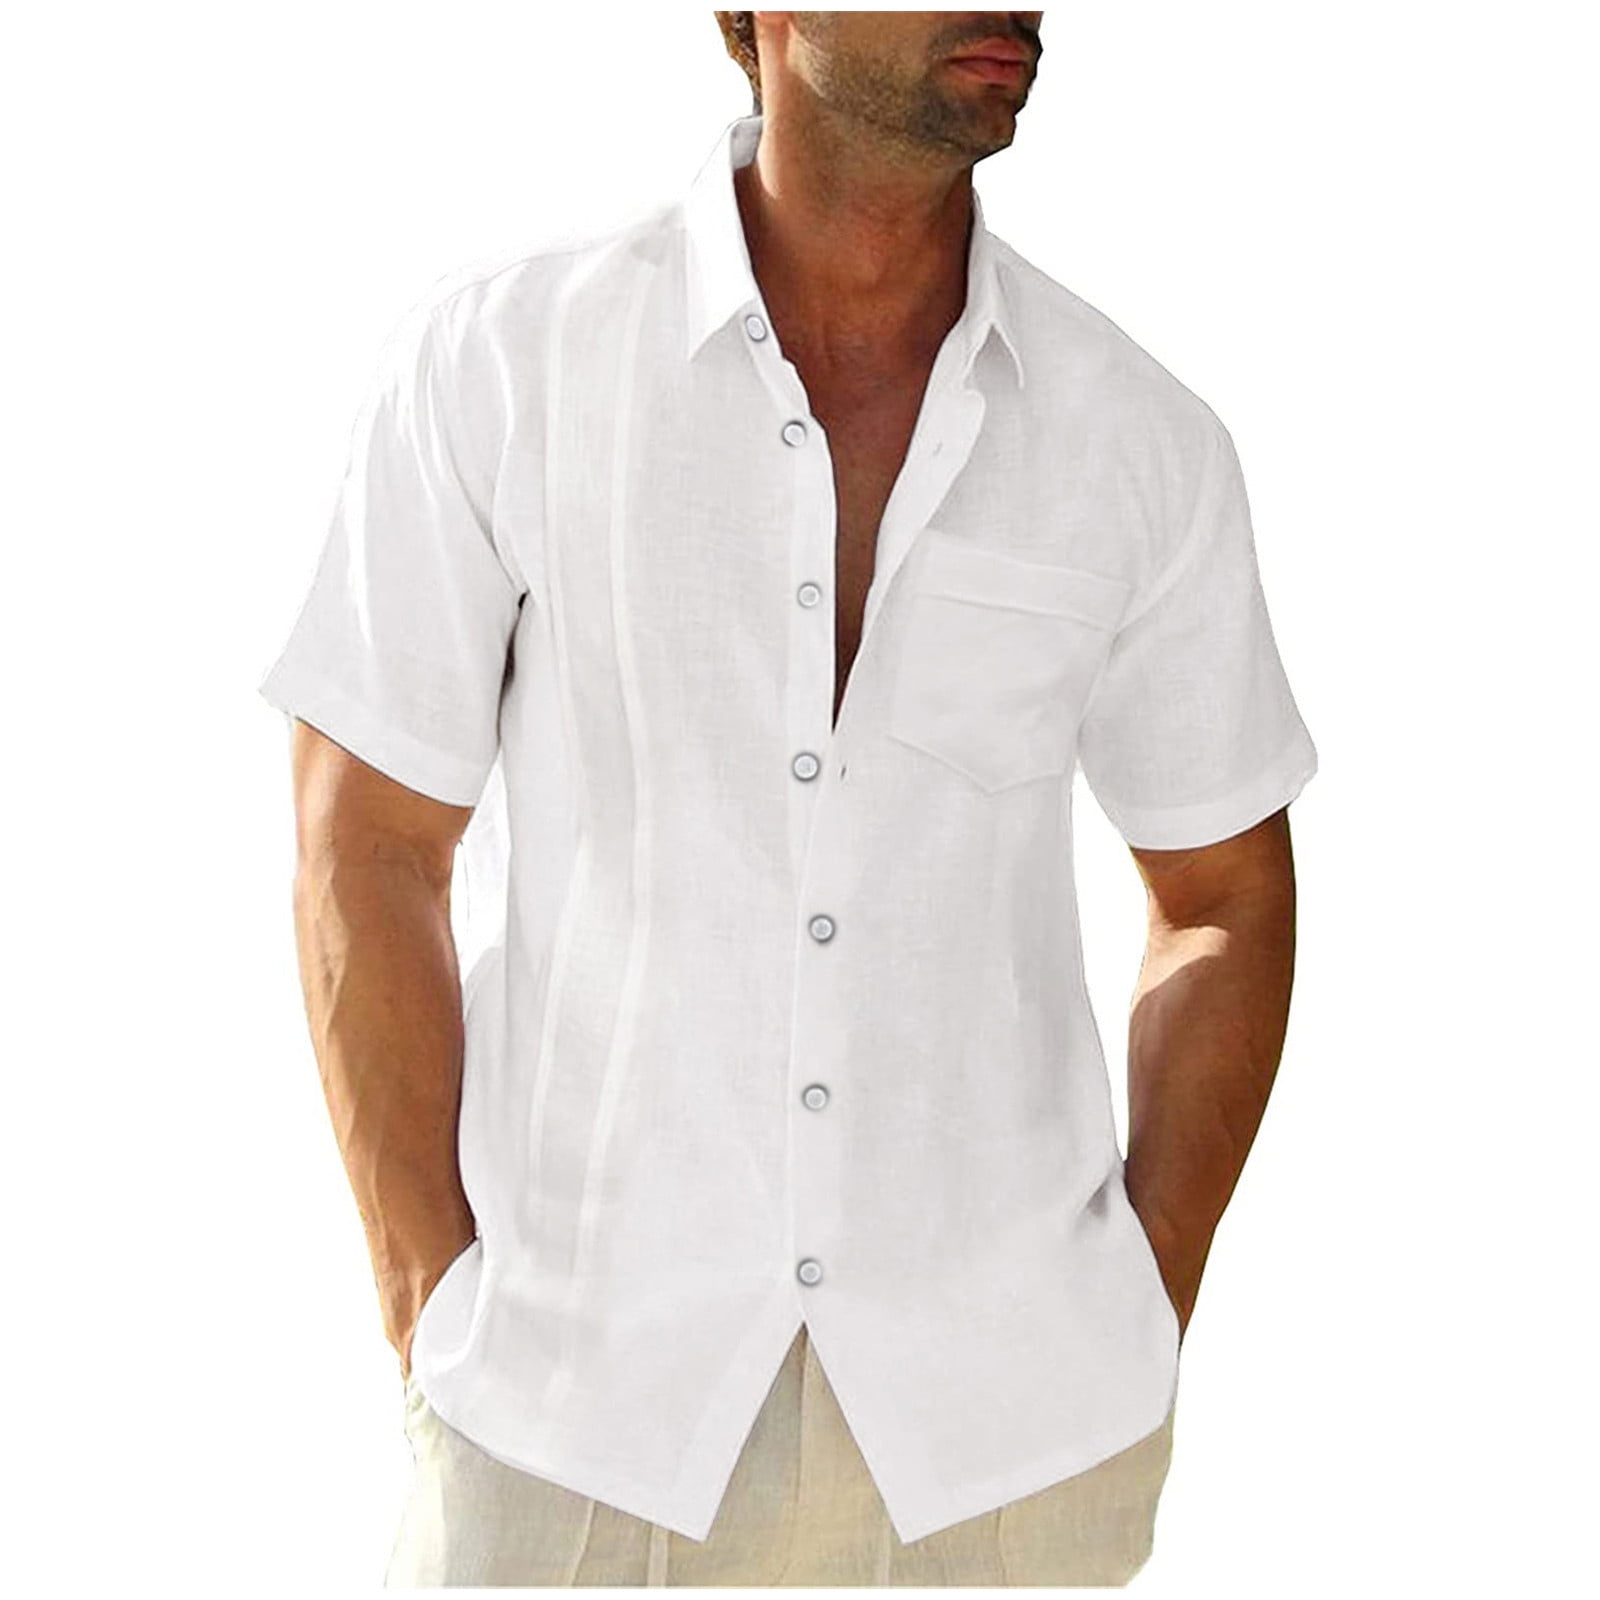 Oalirro Short Sleeve Button up Shirts for Men Deals Clearance Men's Button  Trend Casual Shirts Cotton Linen Shirts Long Sleeve Shirts